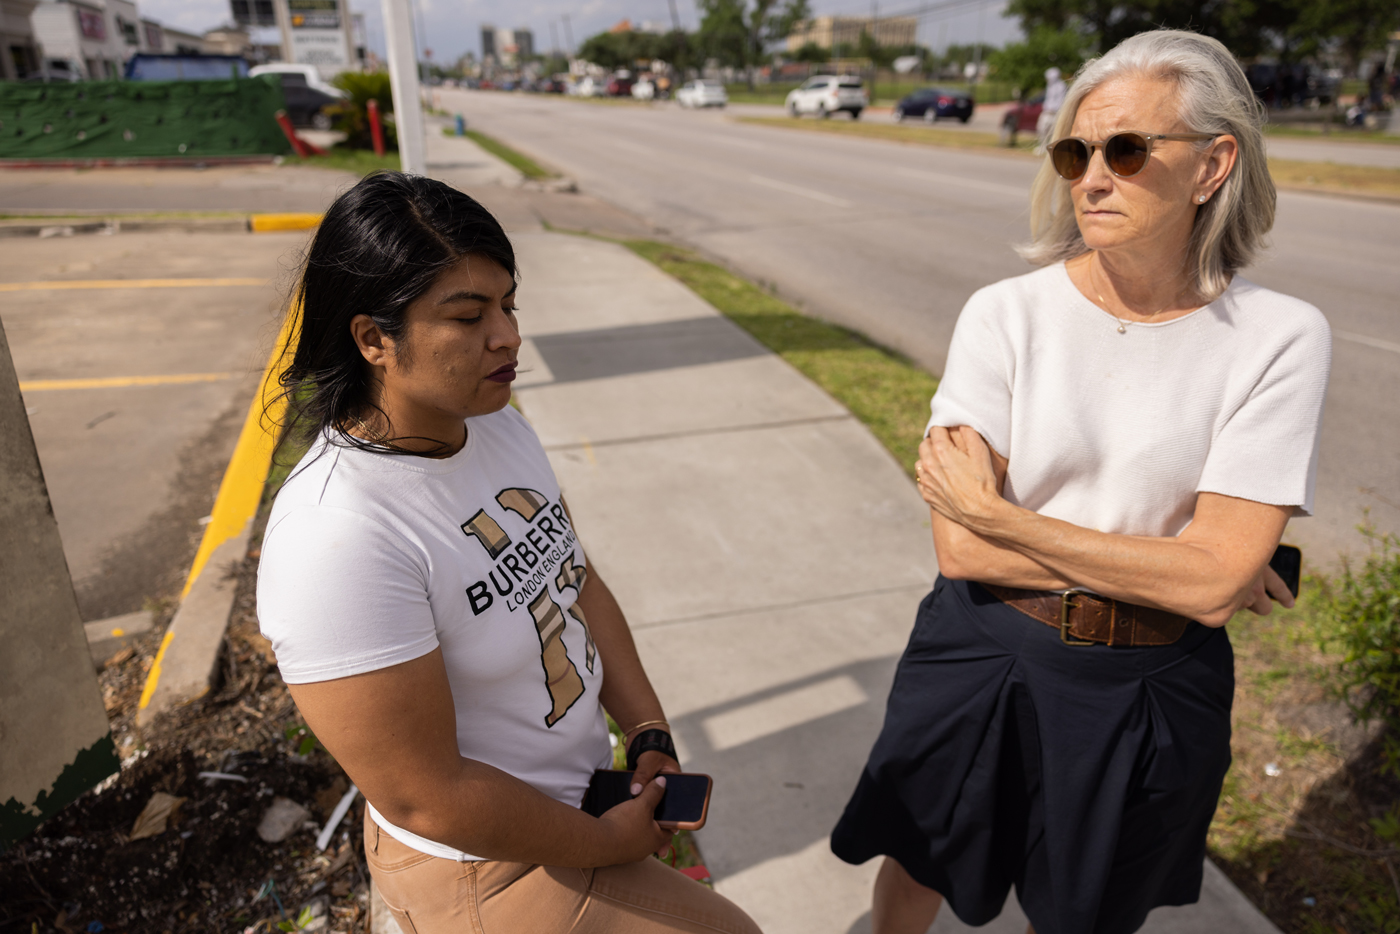 Two women stand on a sidewalk near a school